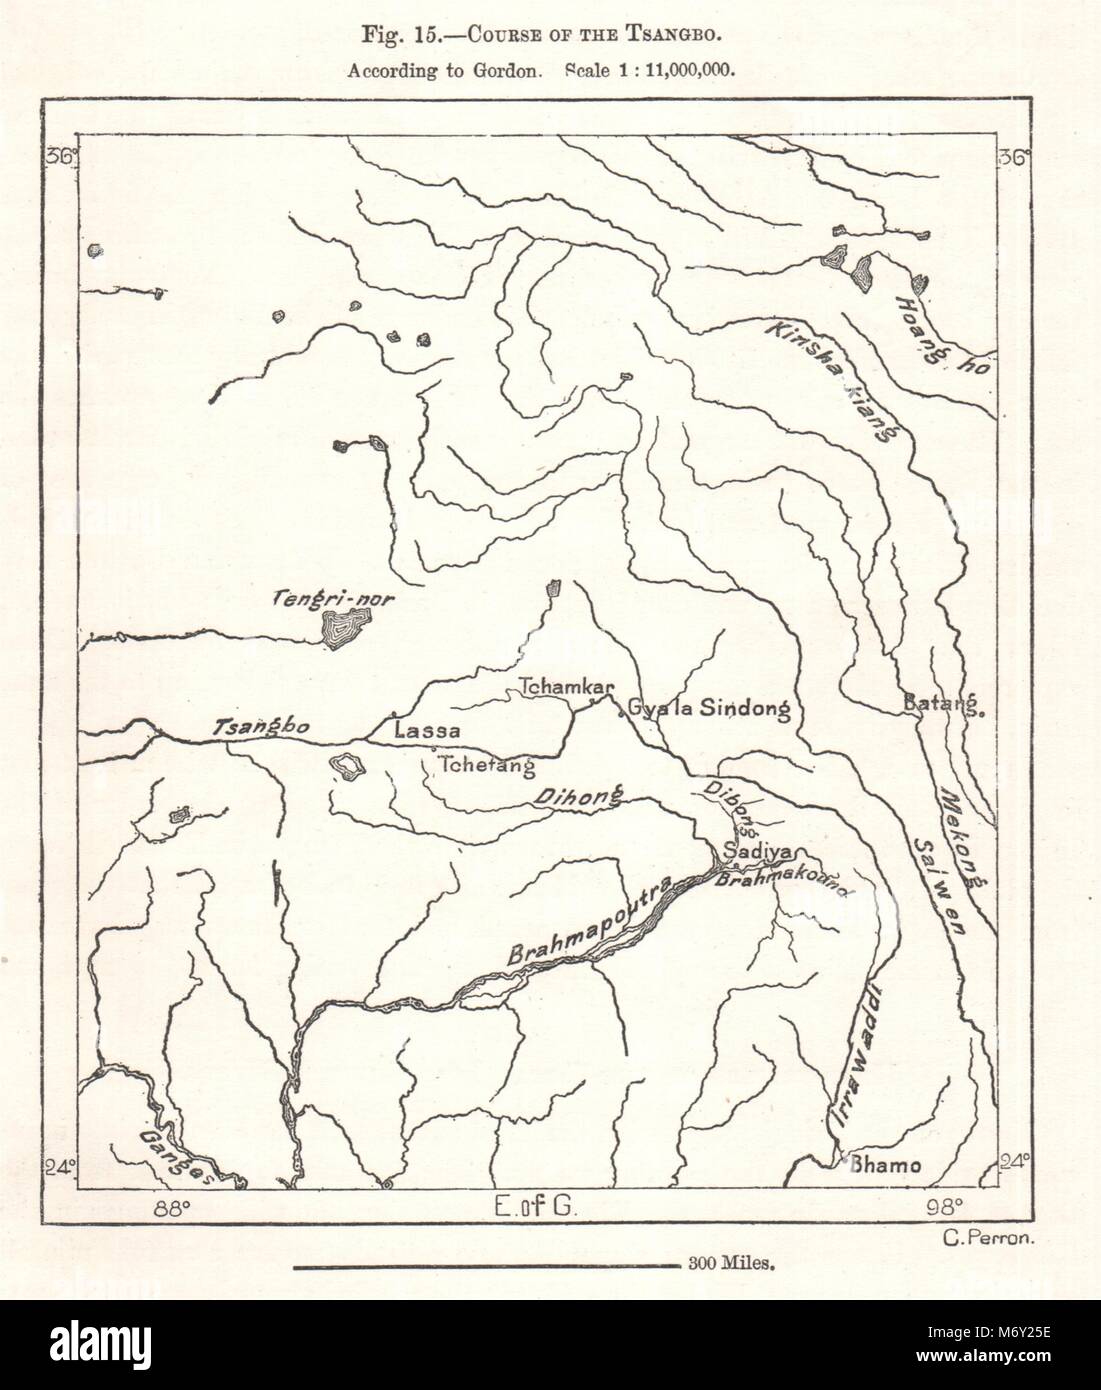 Course of the Yarlung Tsangpo according to Gordon. Tibet. Sketch map 1885 Stock Photo